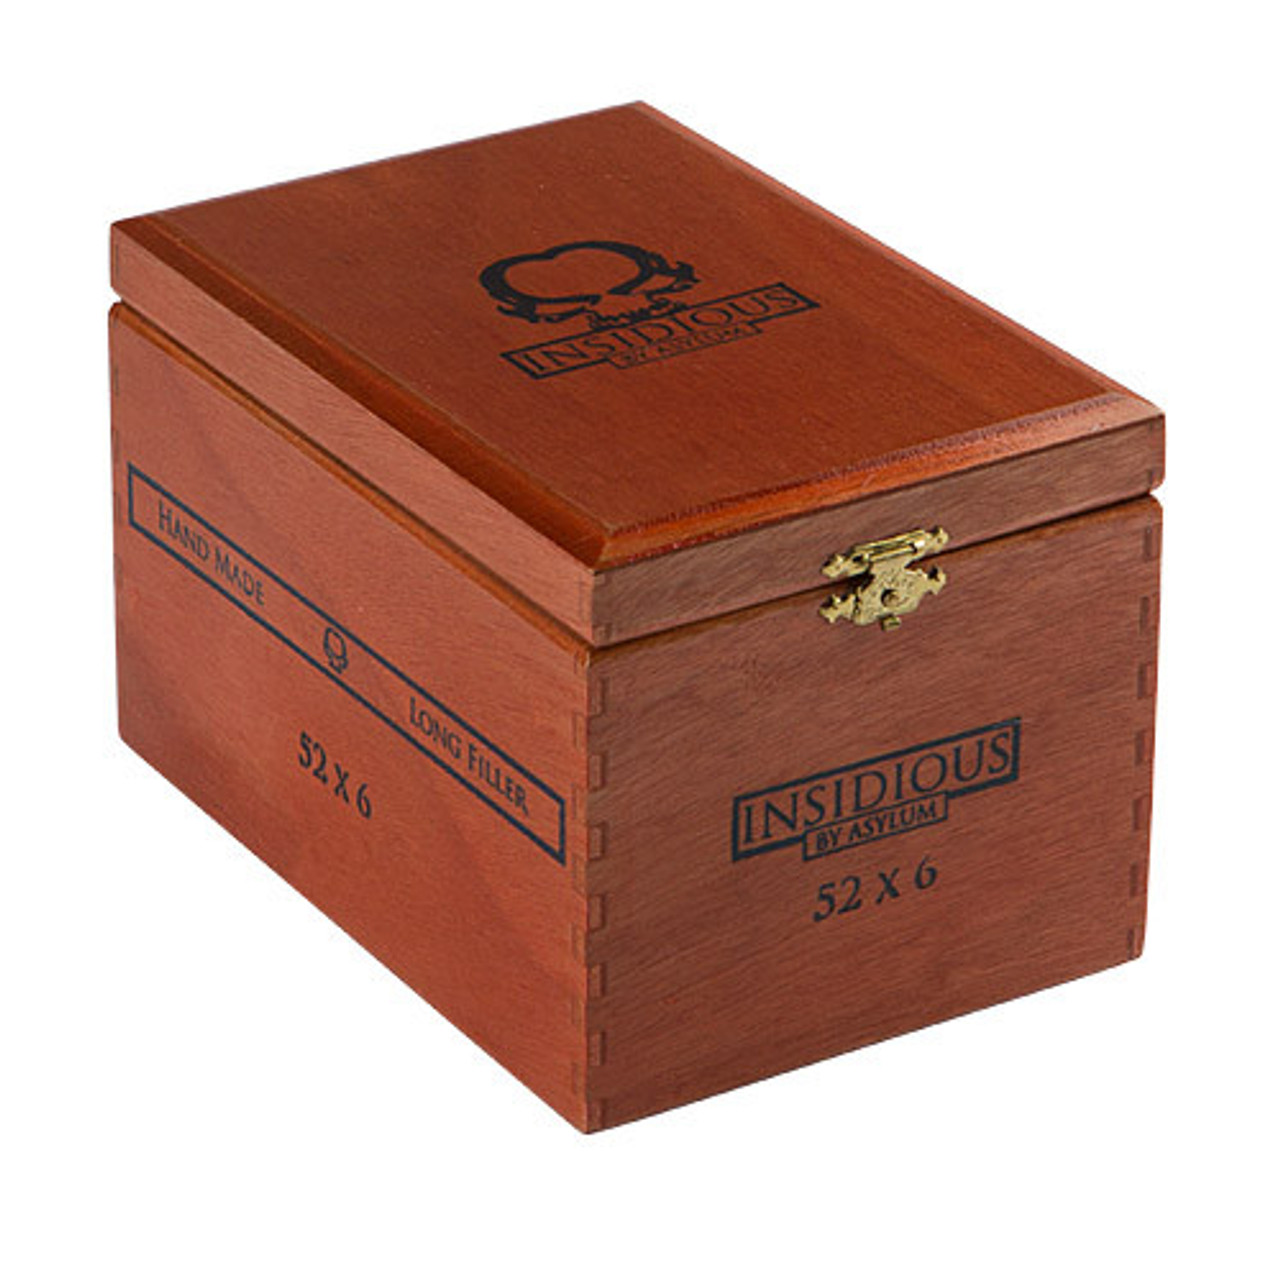 Insidious by Asylum 48 X 7 Cigars - 7 x 48 (Box of 25) *Box